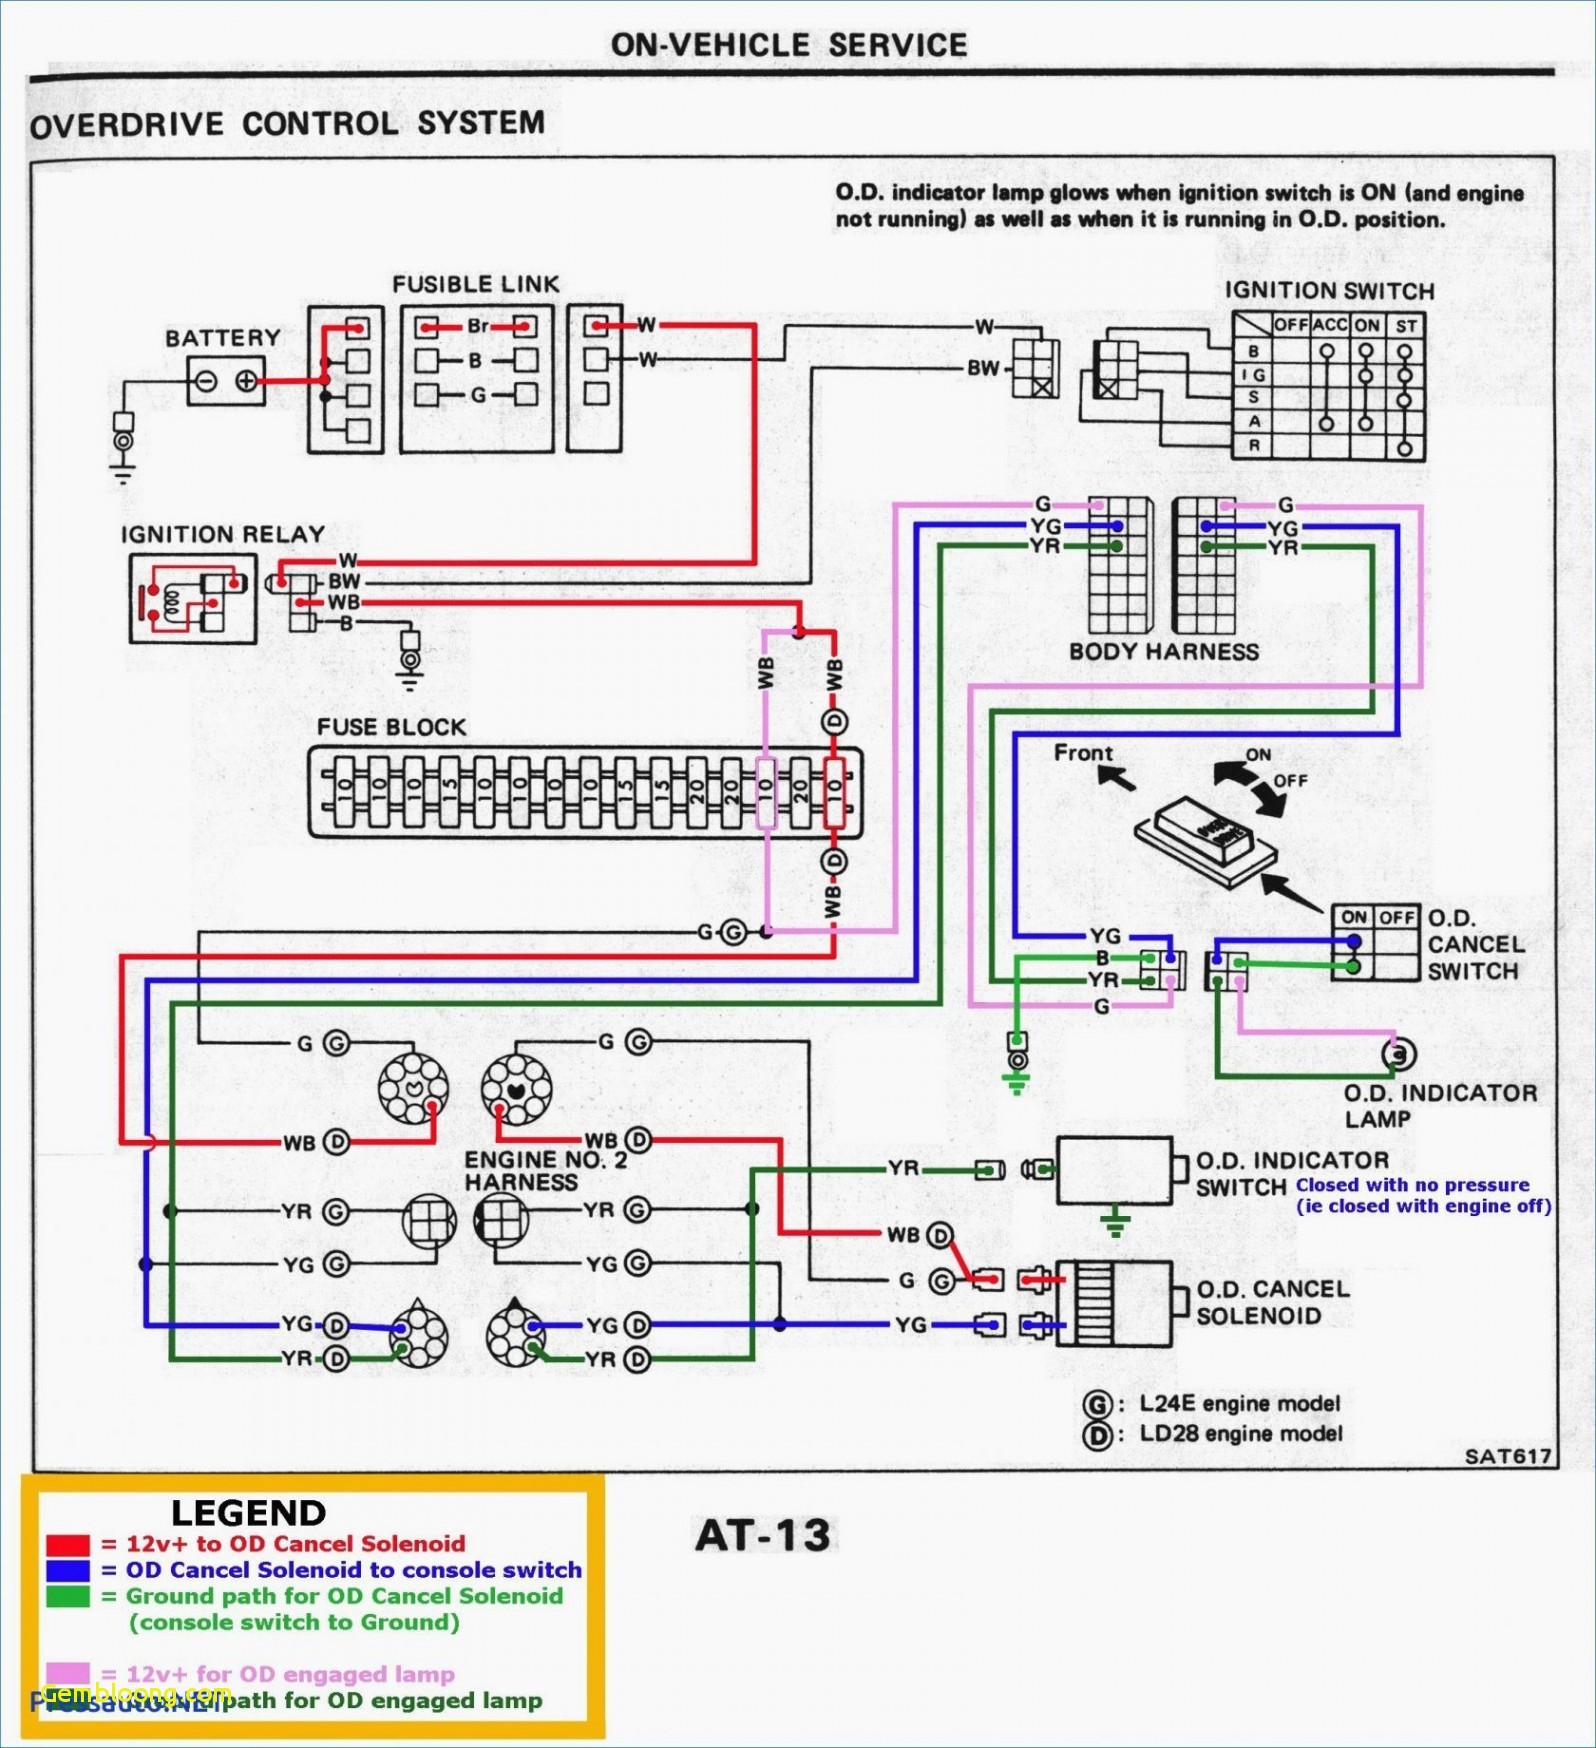 Car Radio Wiring Diagrams Free Free ford Trucks Wiring Diagrams Wiring Diagram for ford F150 Of Car Radio Wiring Diagrams Free